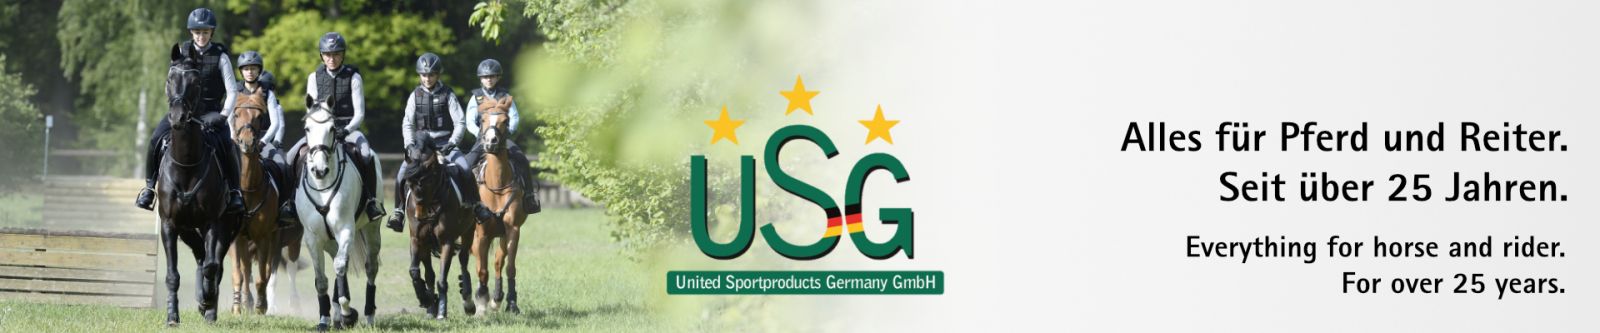 Career - USG - United Sportproducts Germany GmbH